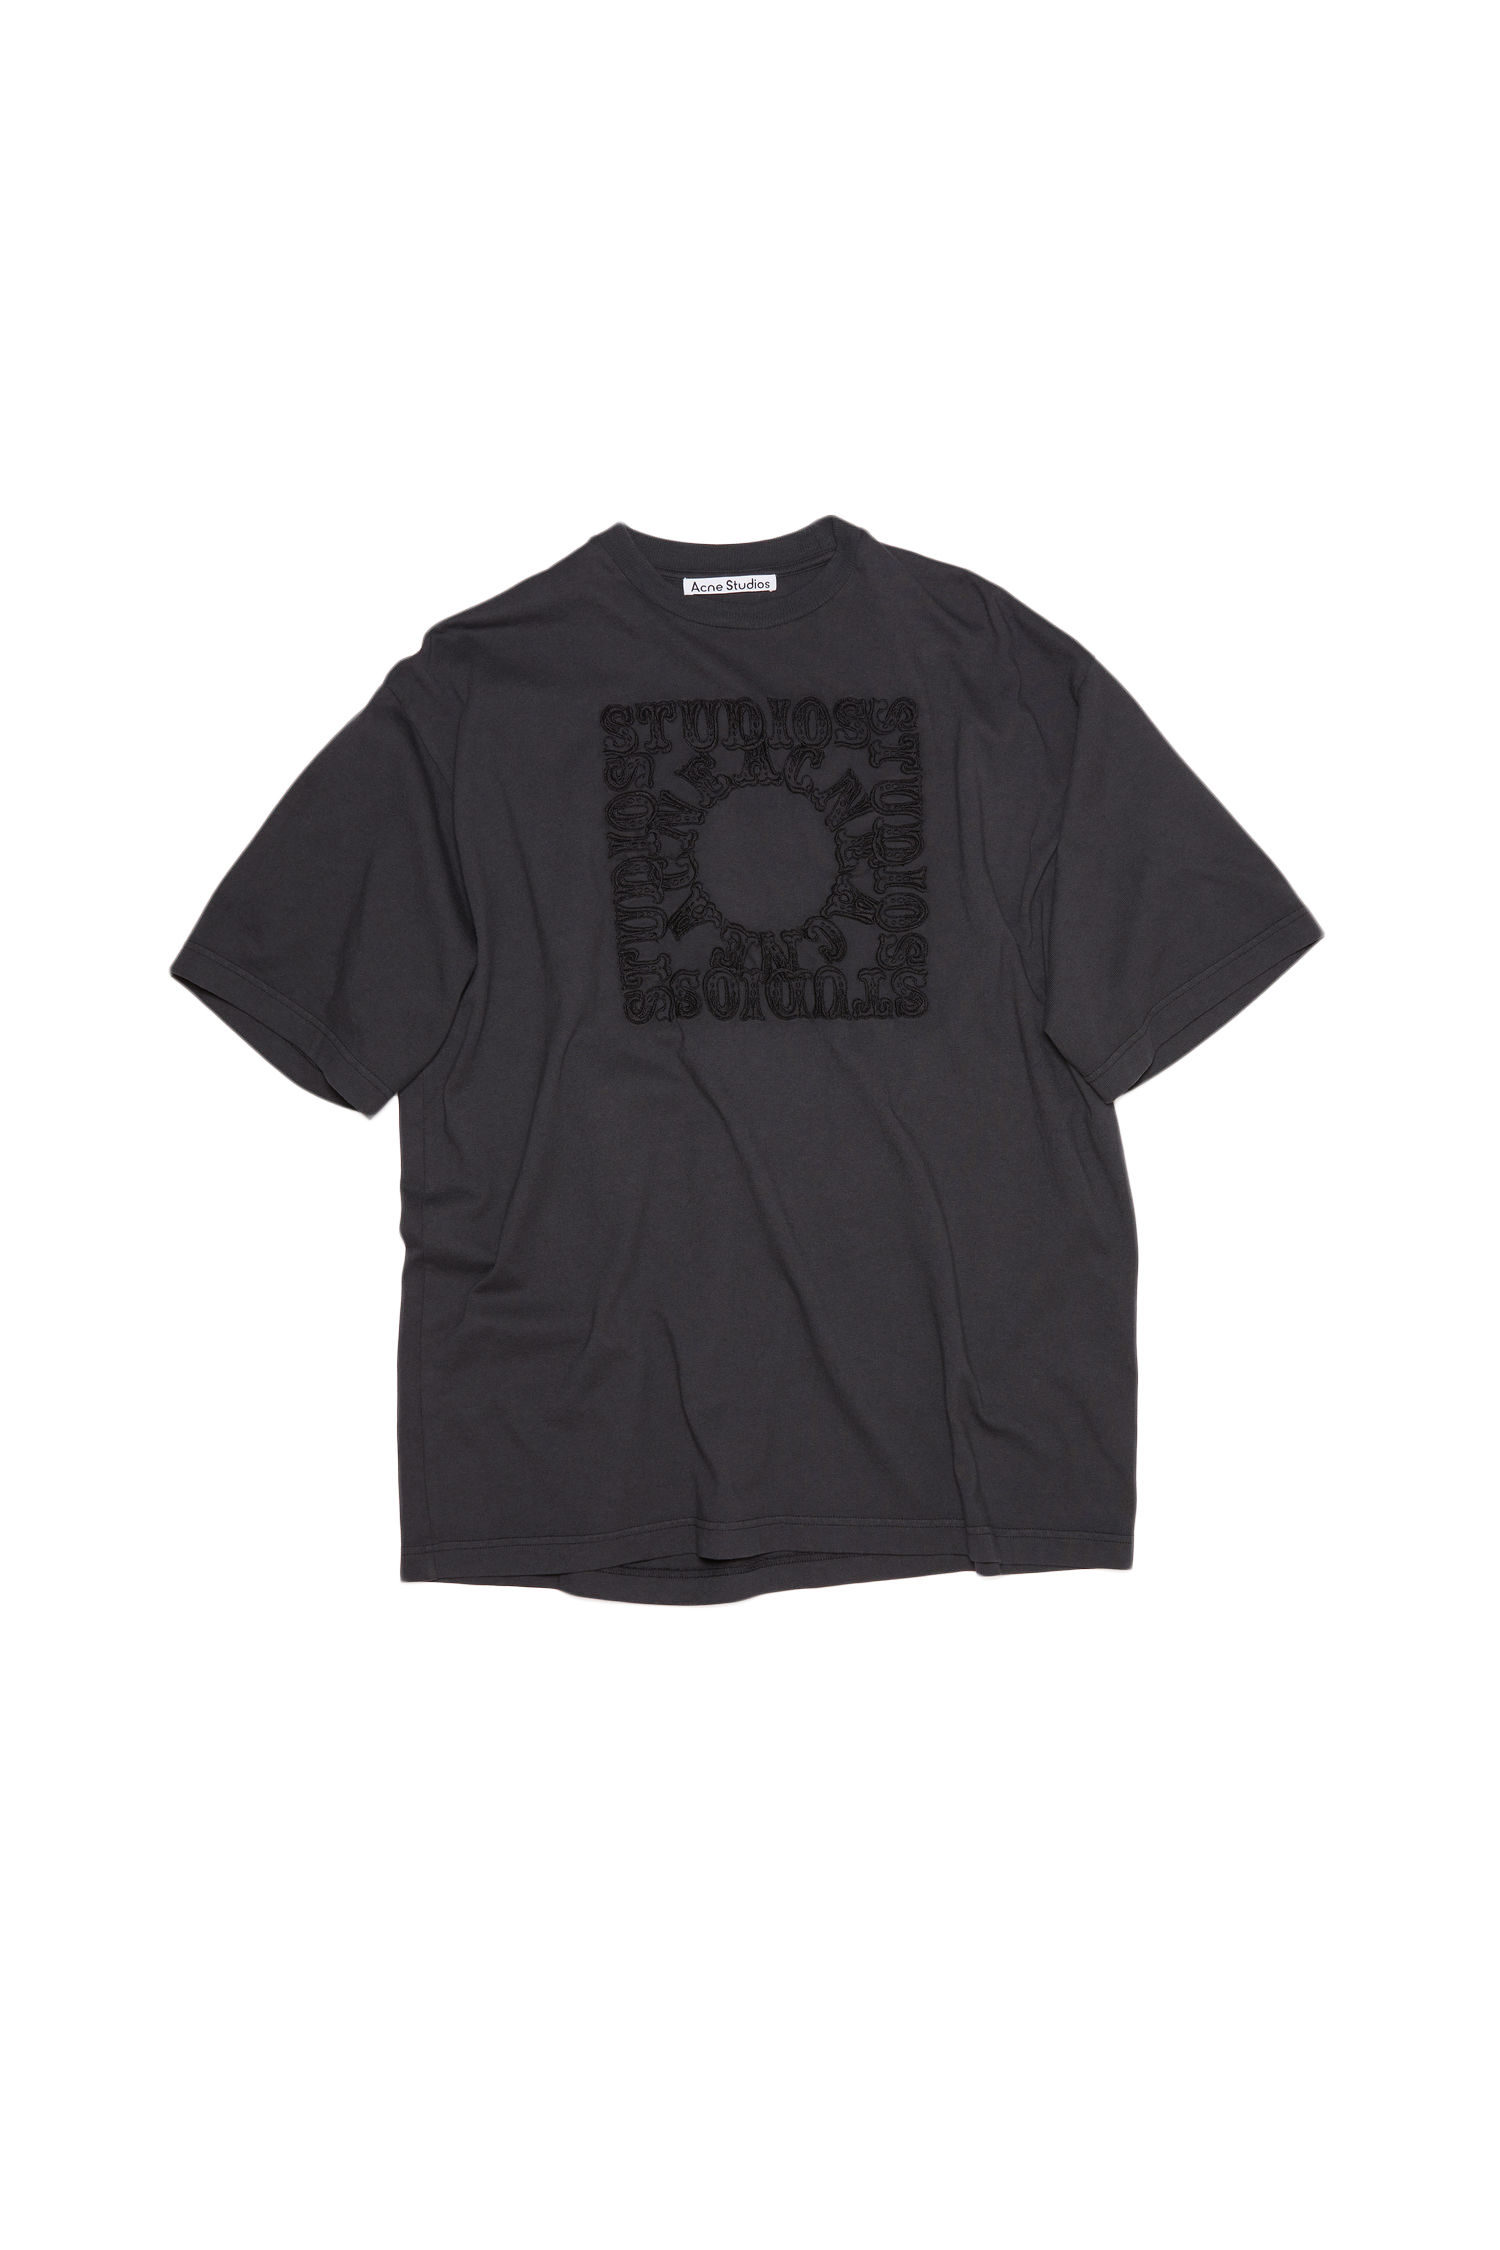 Acne Studios Circus Embroidered Crewneck T-shirt Faded Black